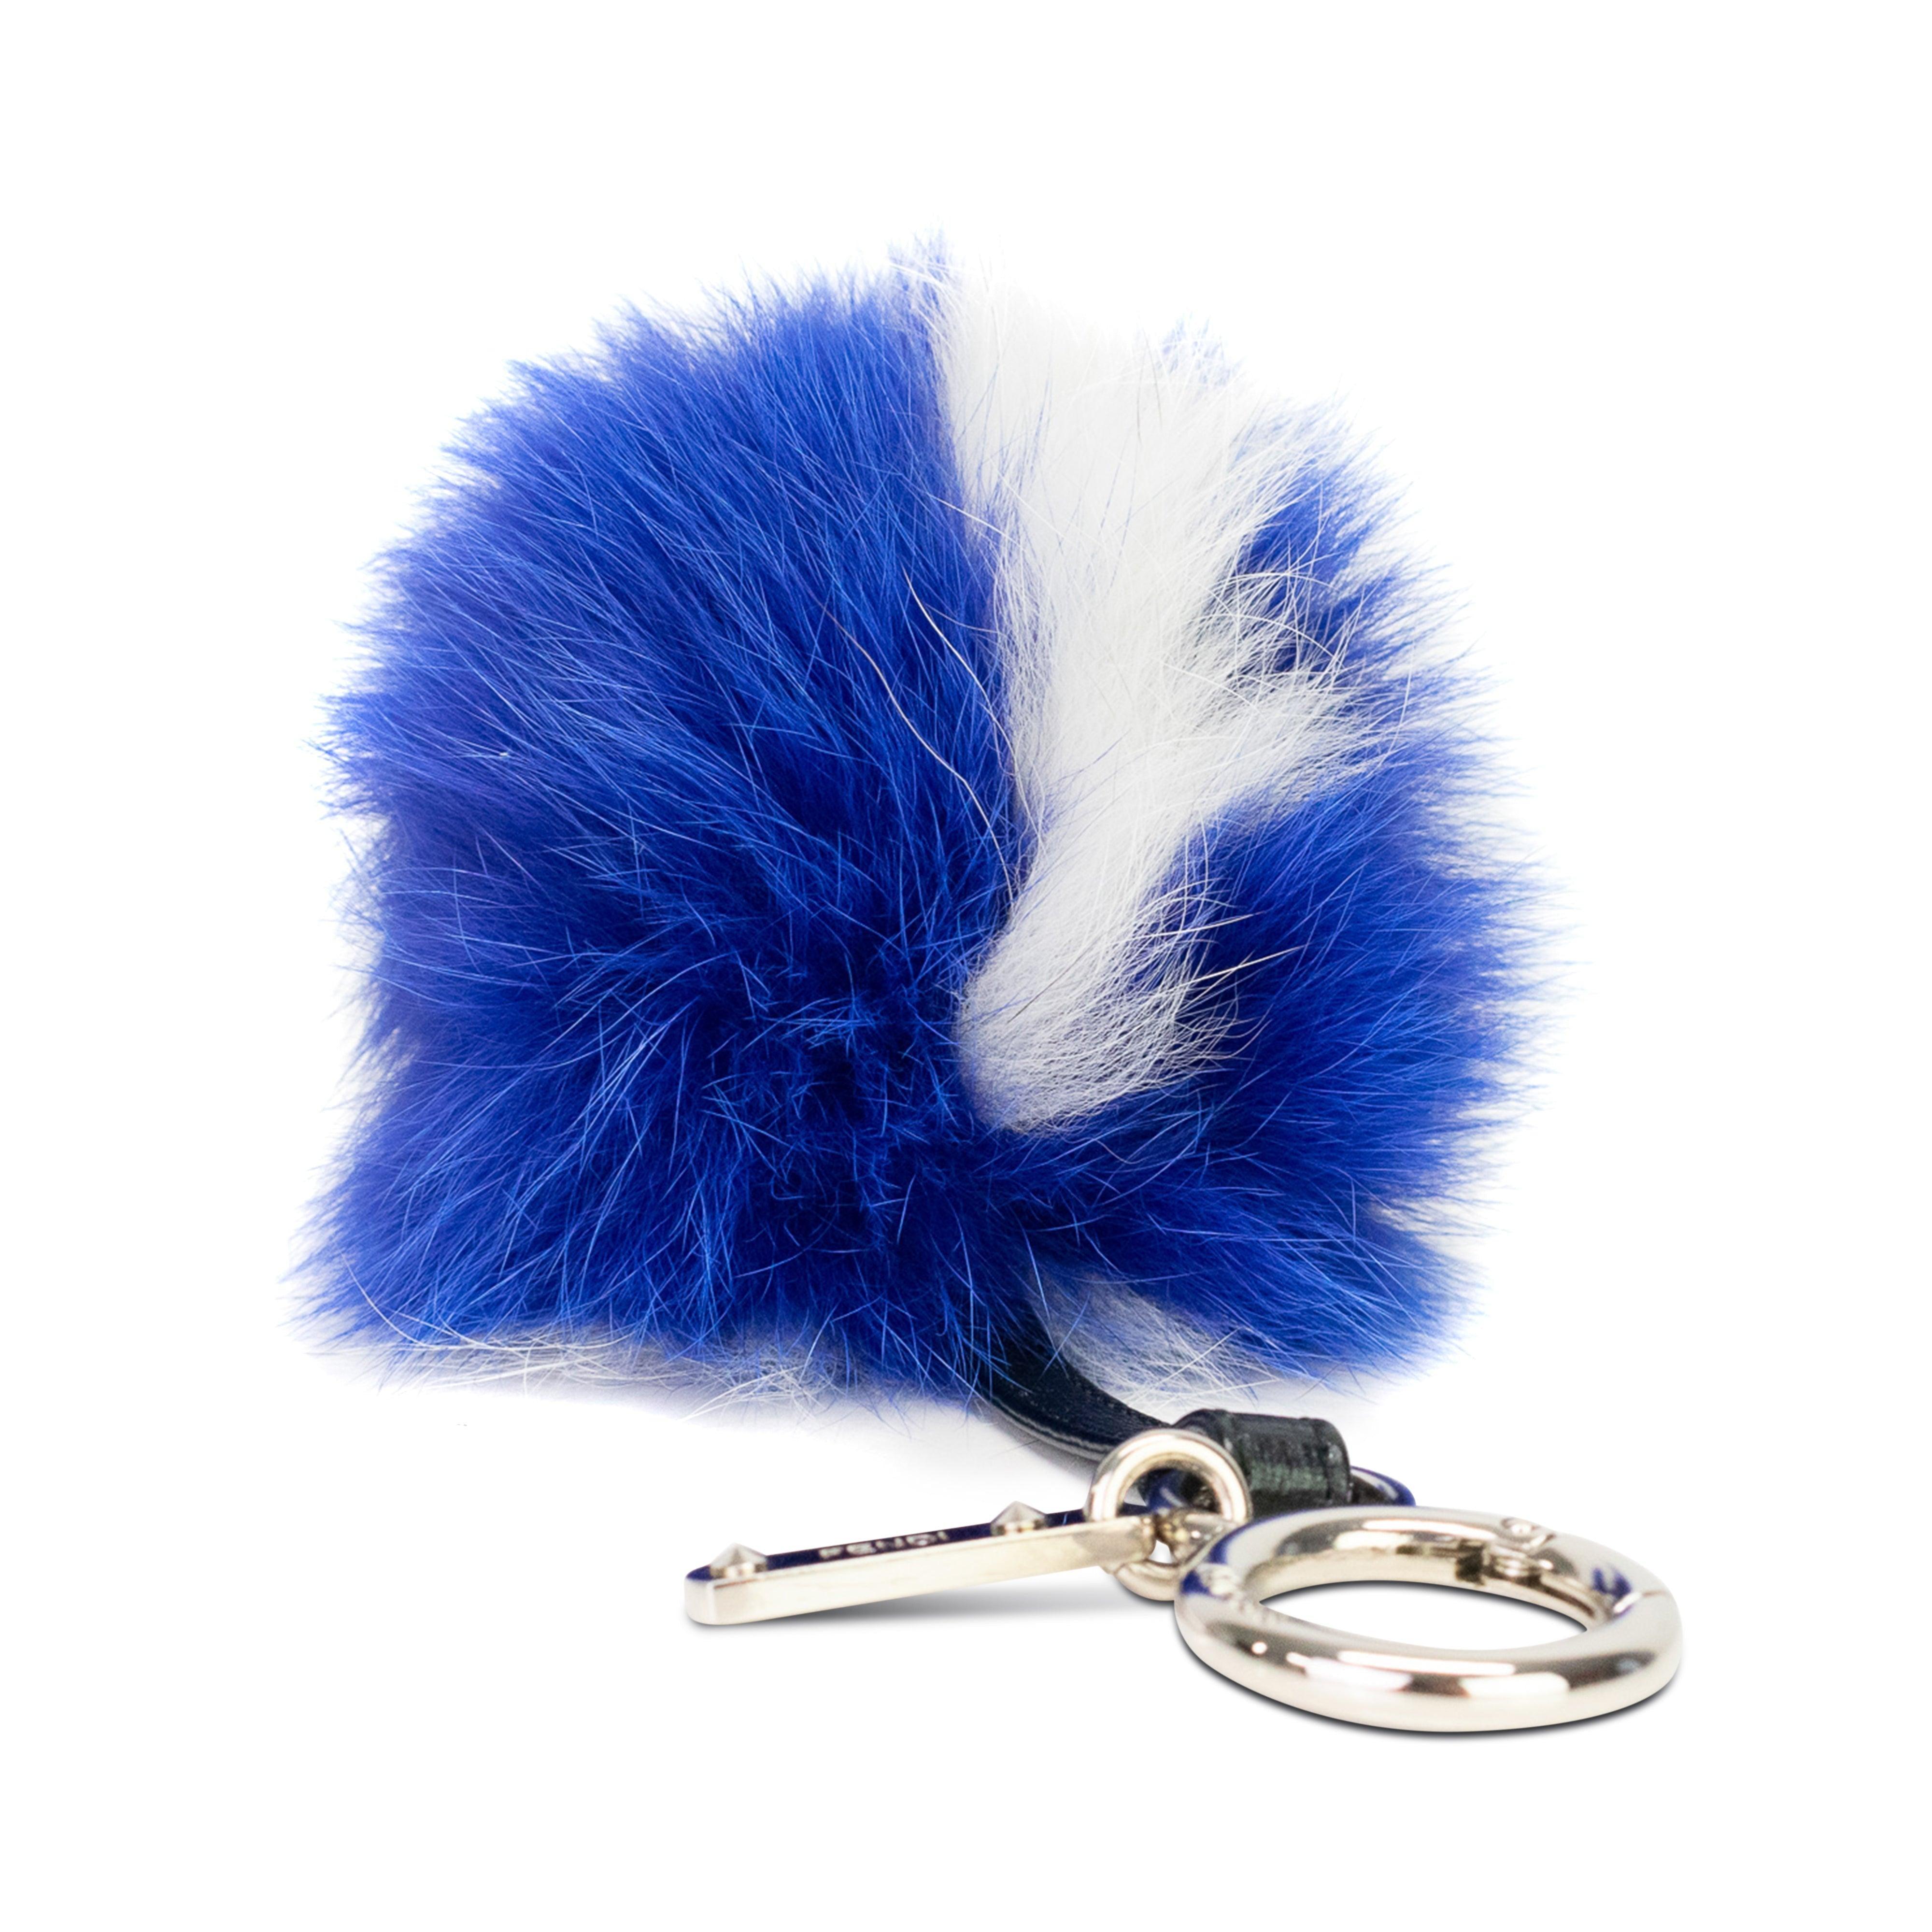 Fendi Fur Keychain - Fashionably Yours